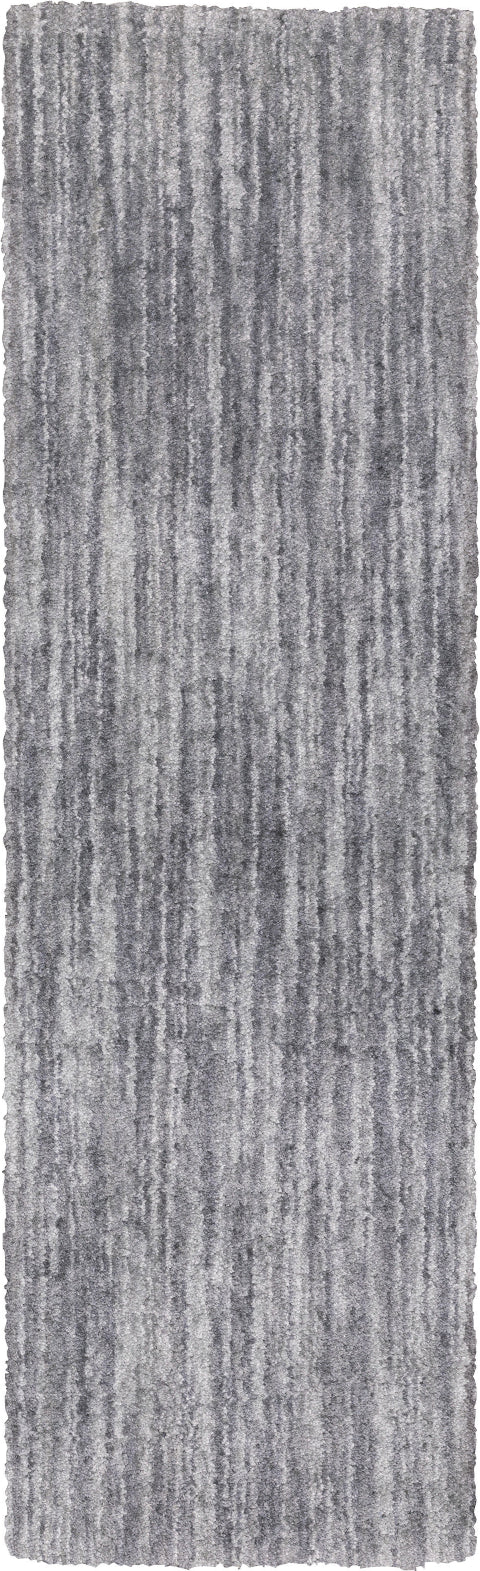 Oriental Weavers Aspen 829E9 Grey/Grey Area Rug 2'3'' X 7'6'' Runner Image